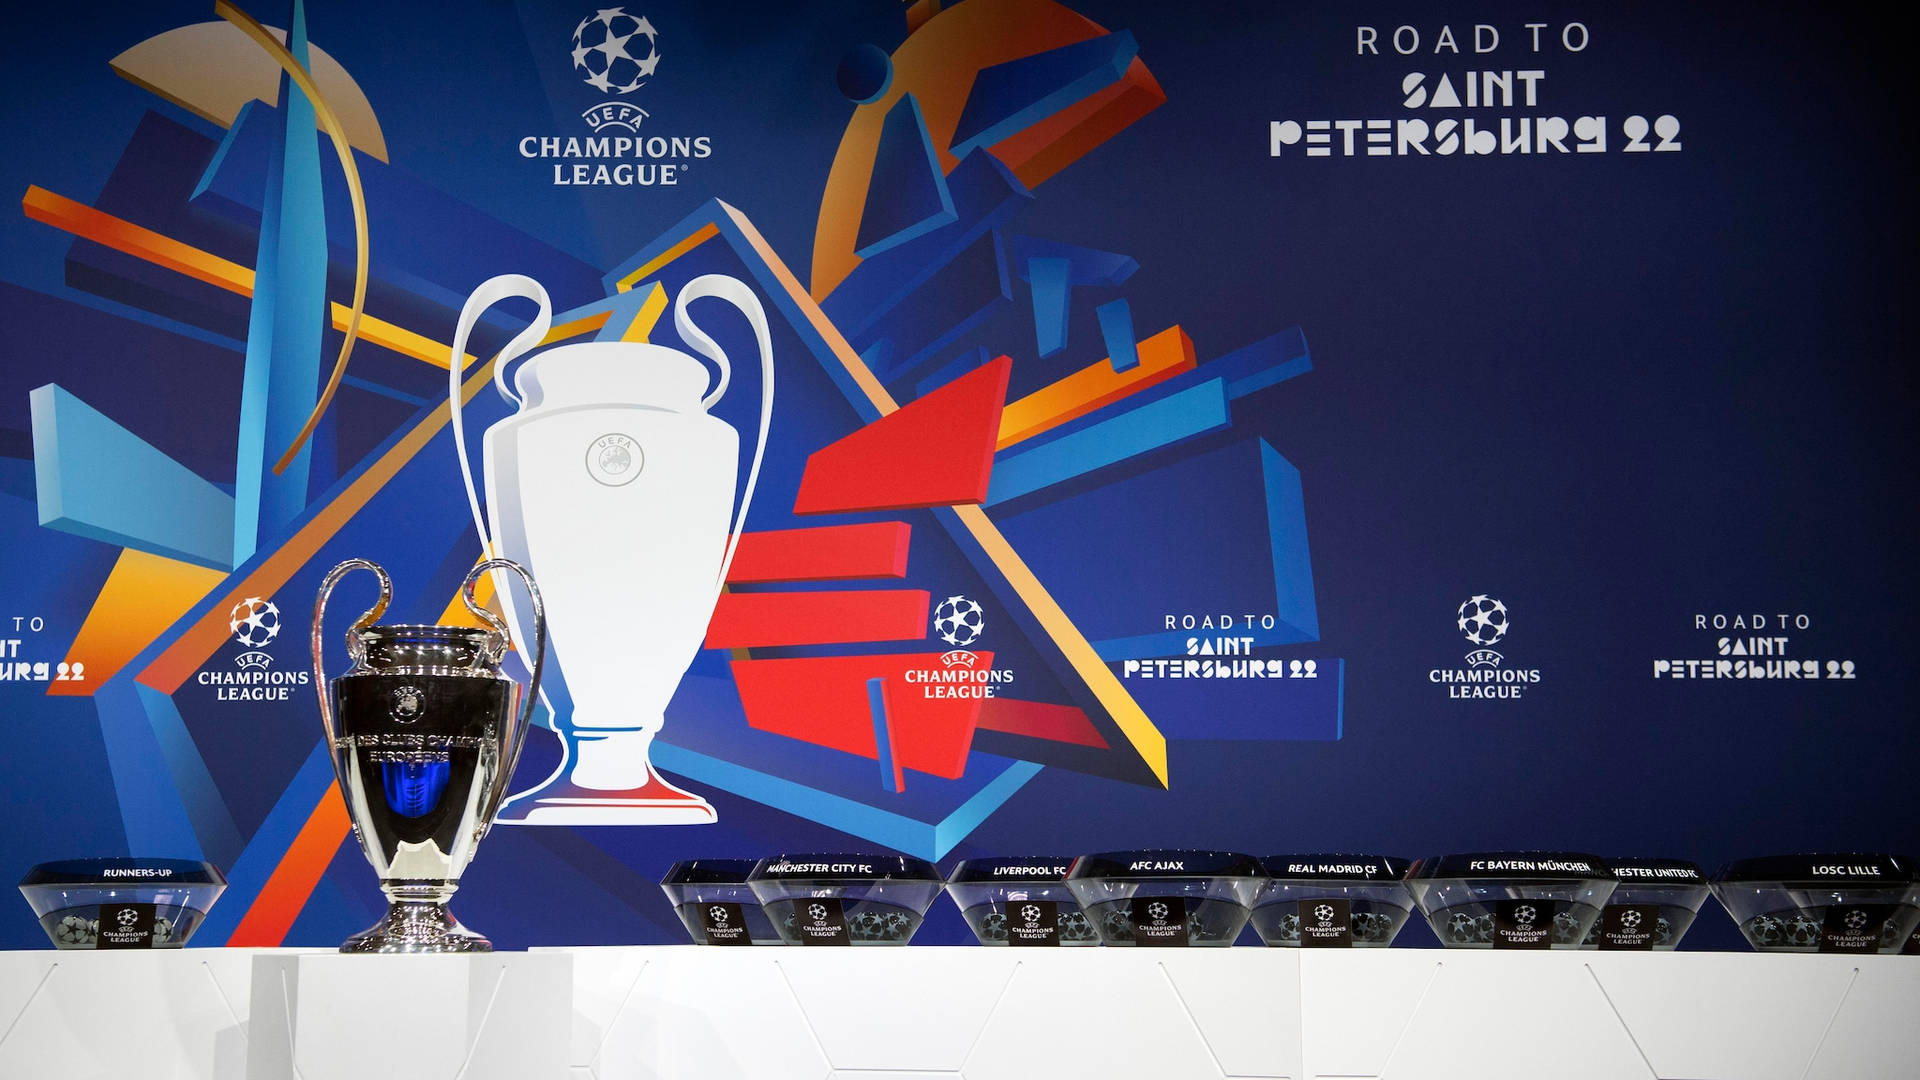 UEFA Champions League Finals In St. Petersburg 2022 Wallpaper